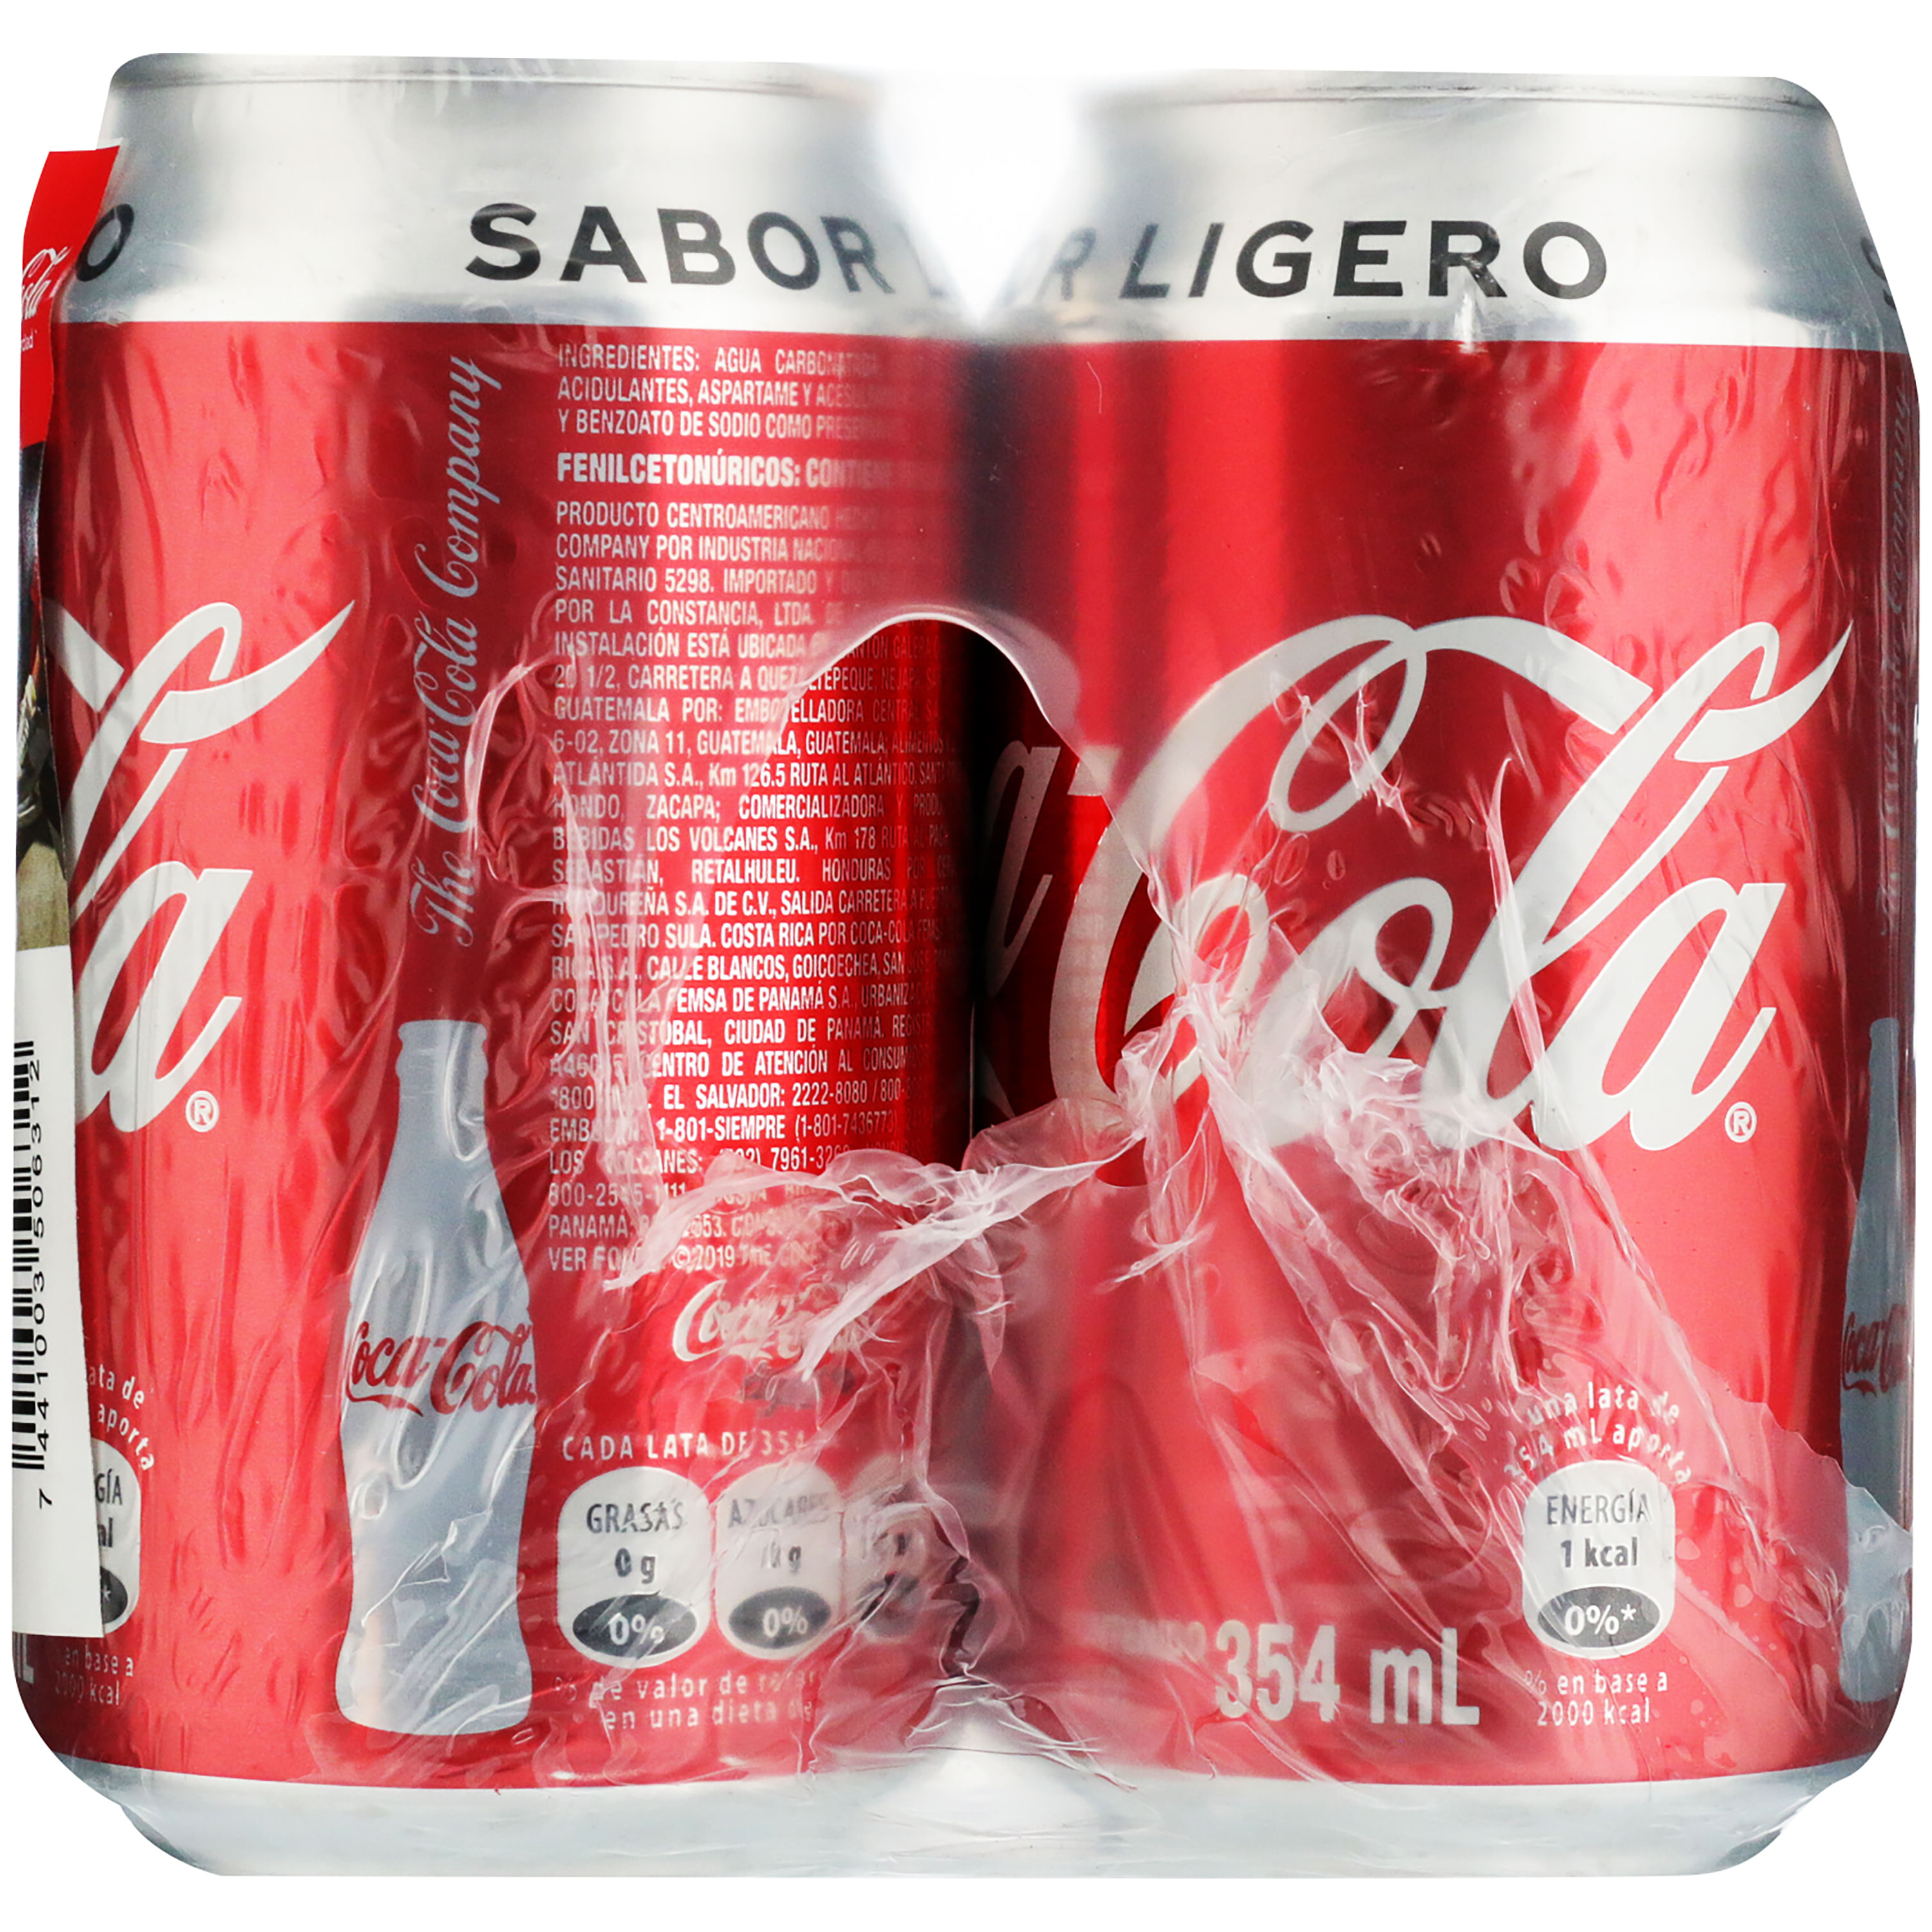 Comprar refresco coca cola zero pack